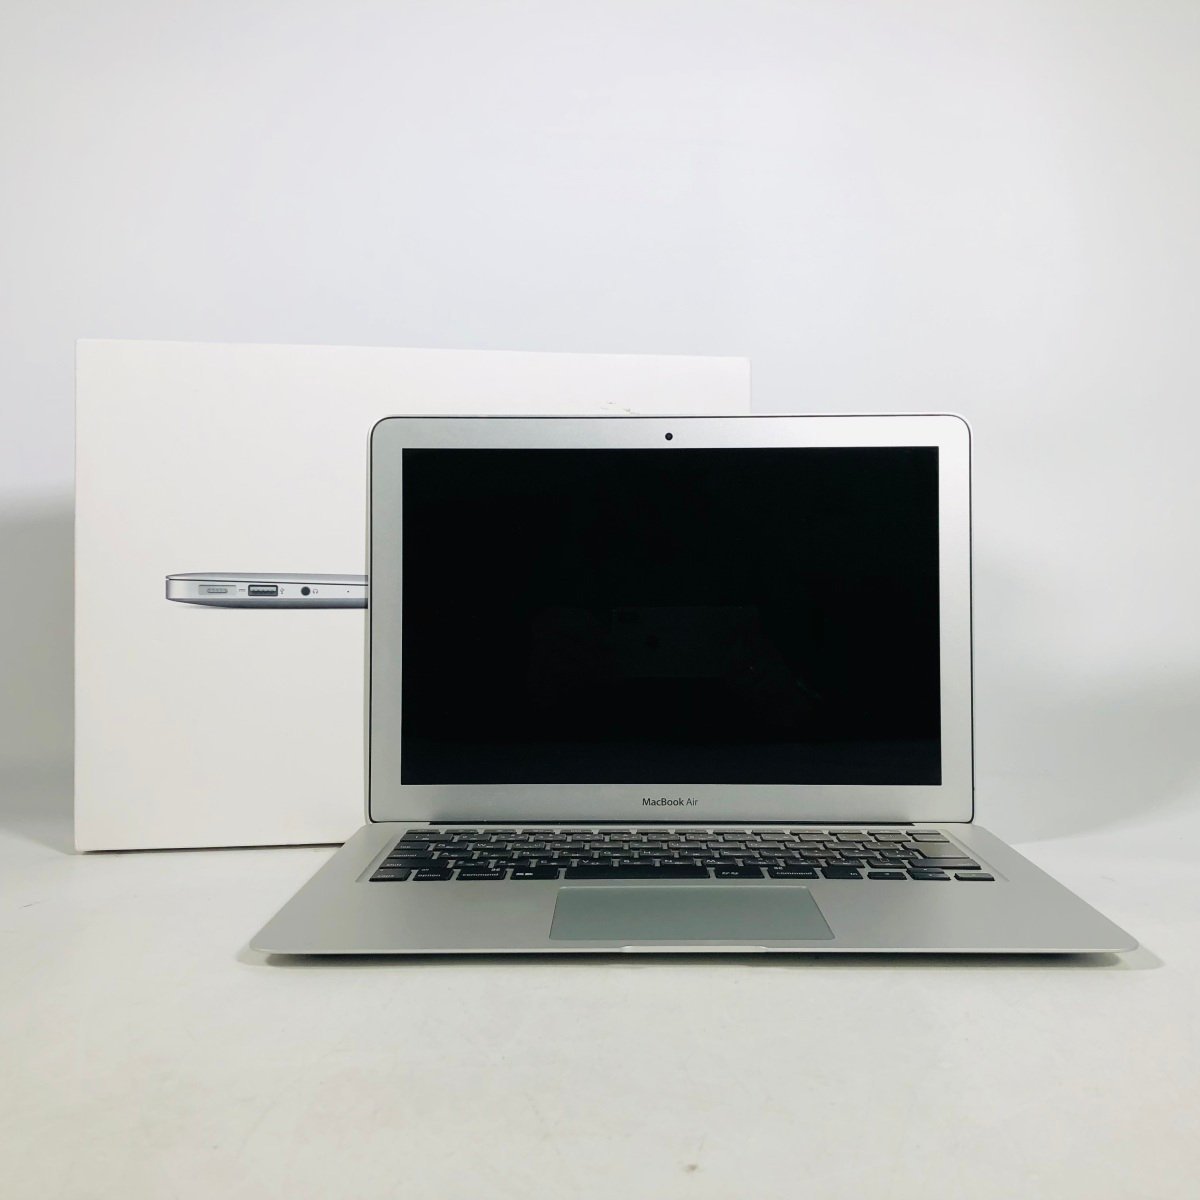 MacBook Air 【多数取り扱っています!】 - centrodeendometriose